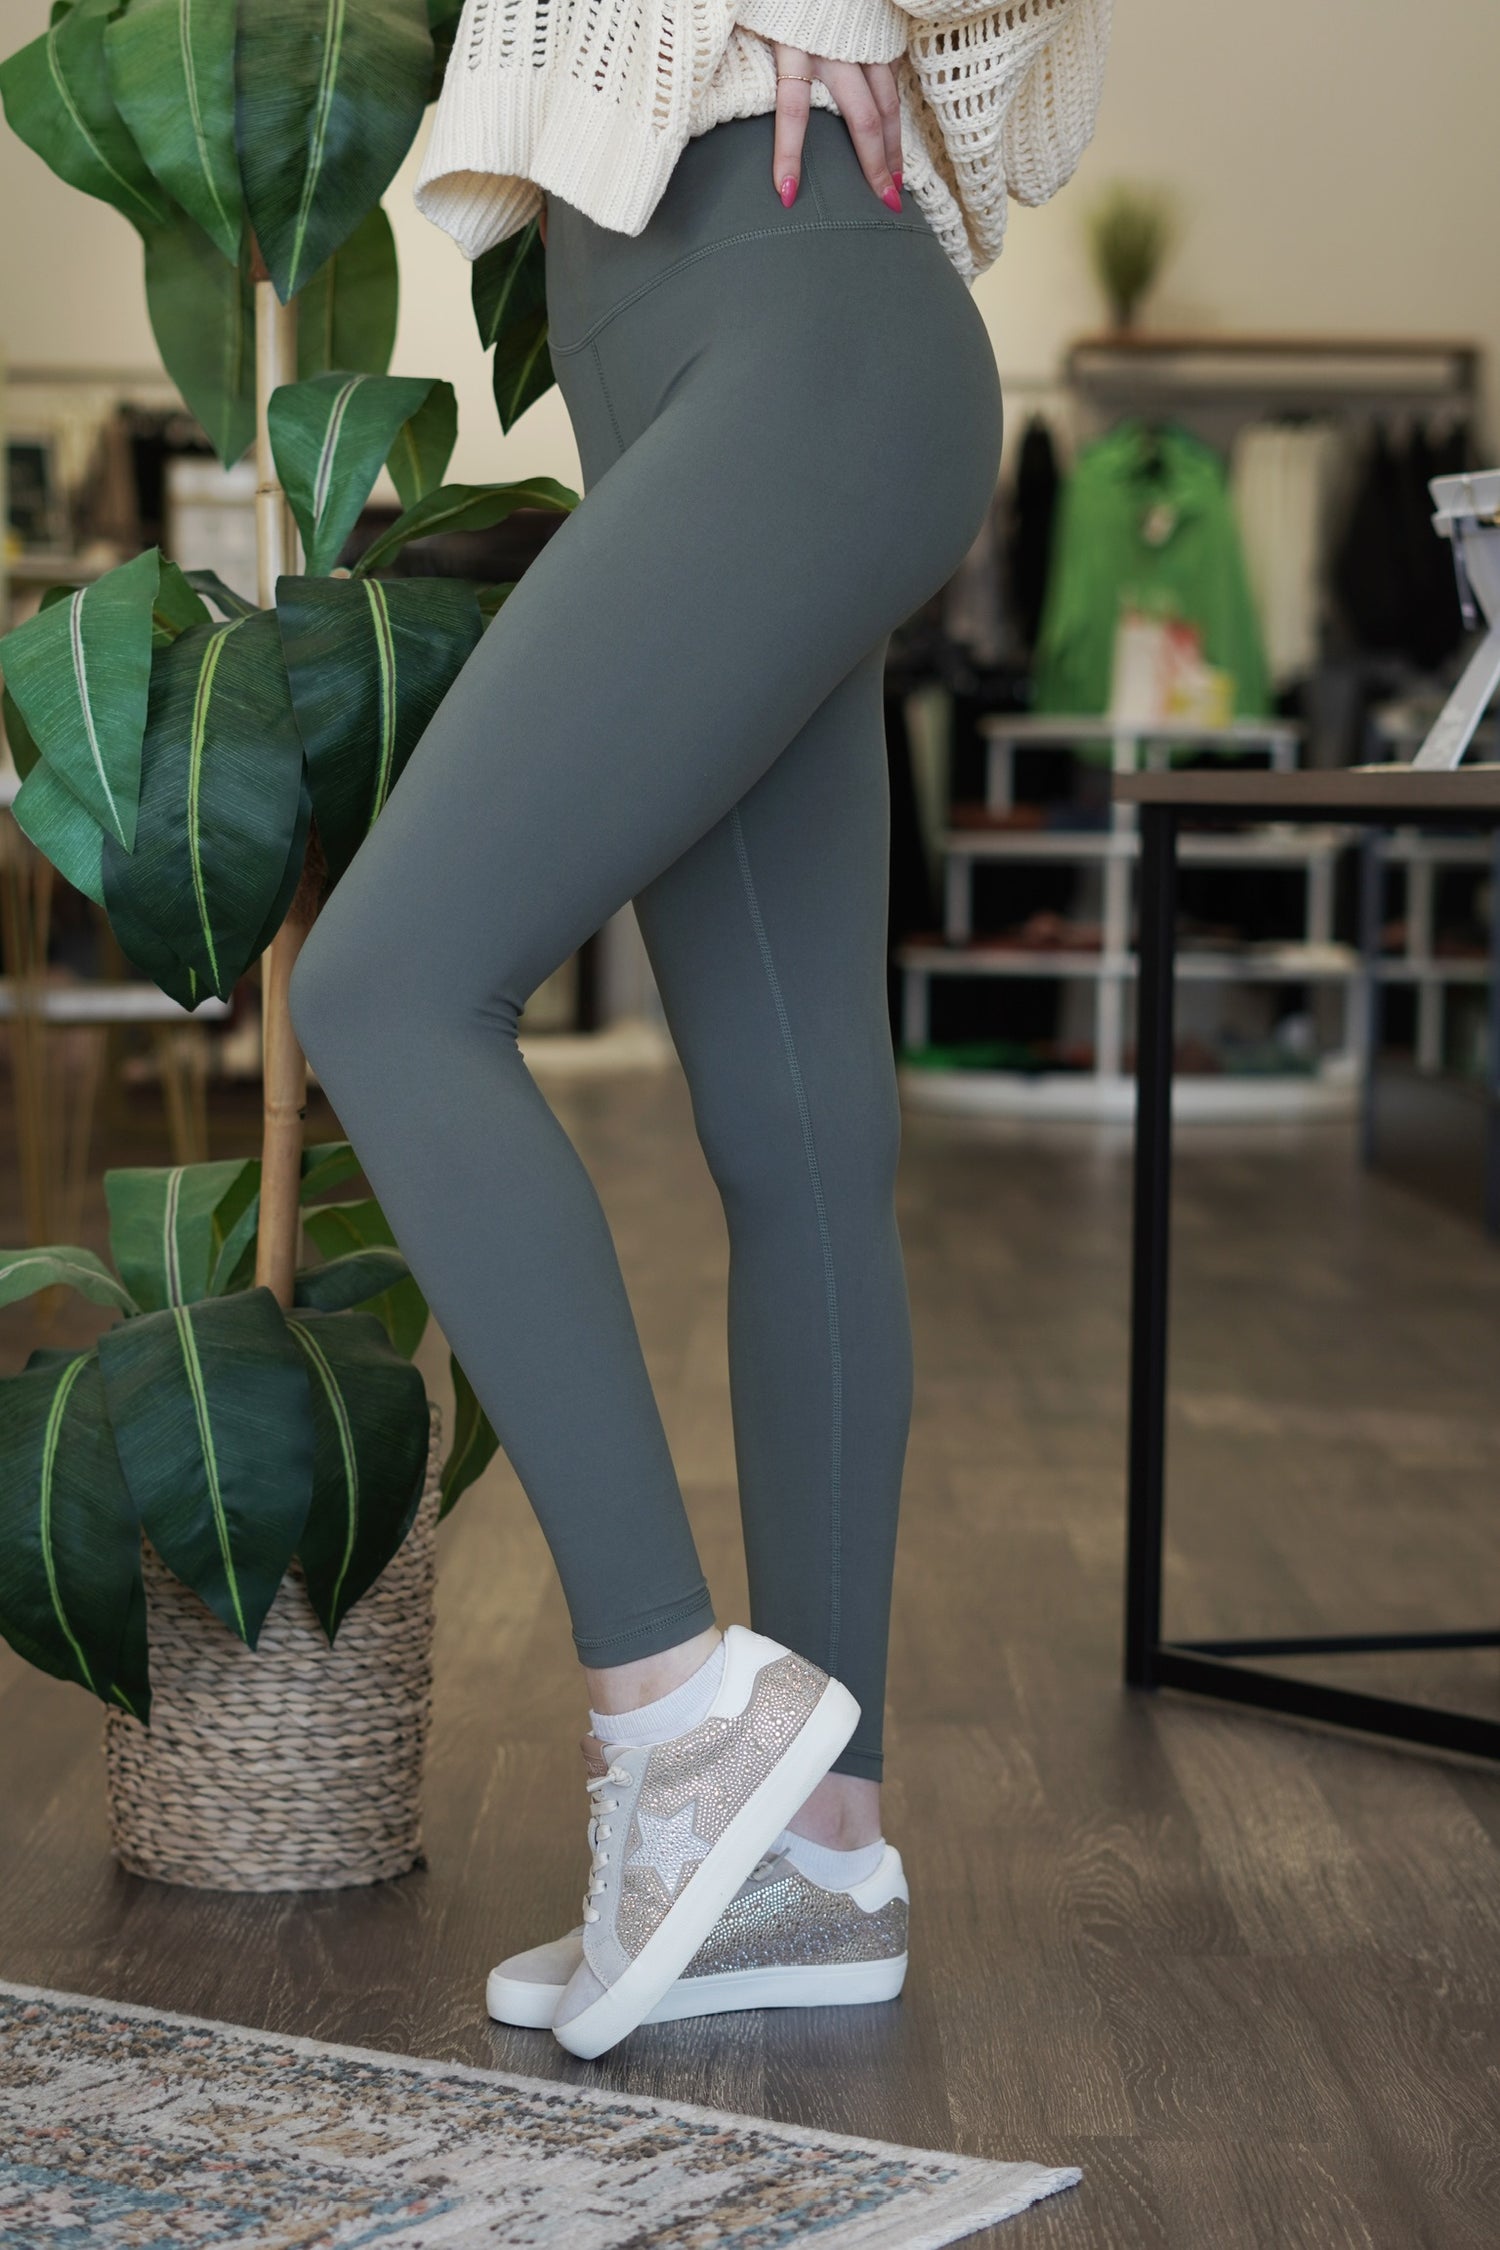 Lululemon grey high waist v capris leggings— these - Depop